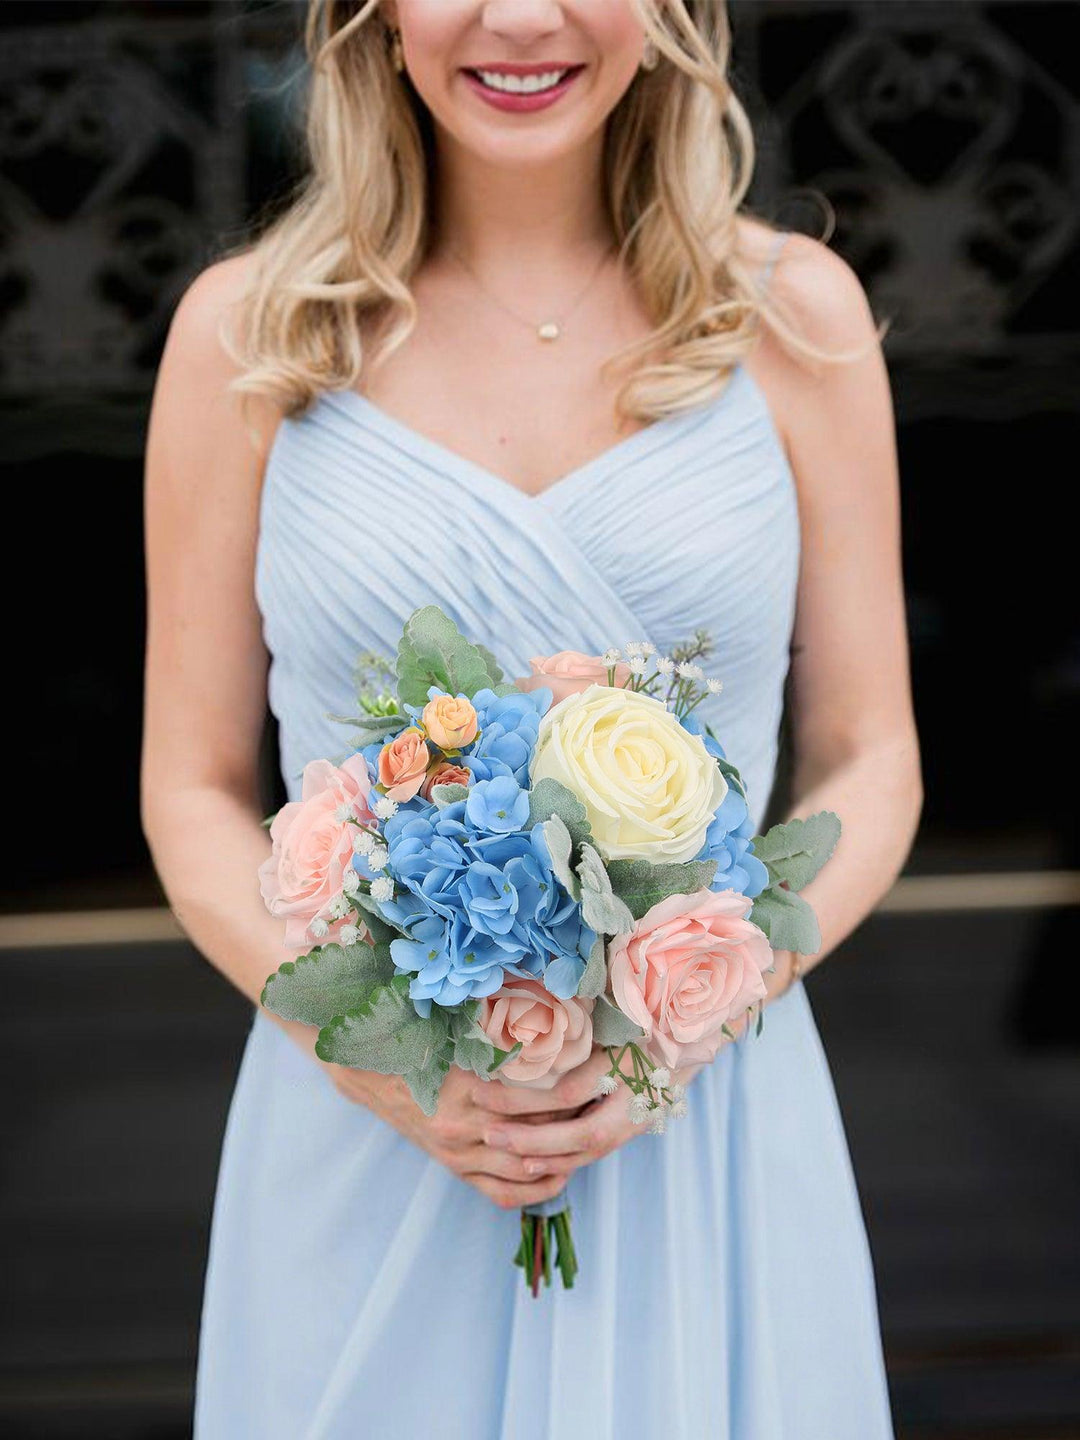 7.8 inch wide Blush & Baby Blue Bridesmaid Bouquet - Rinlong Flower